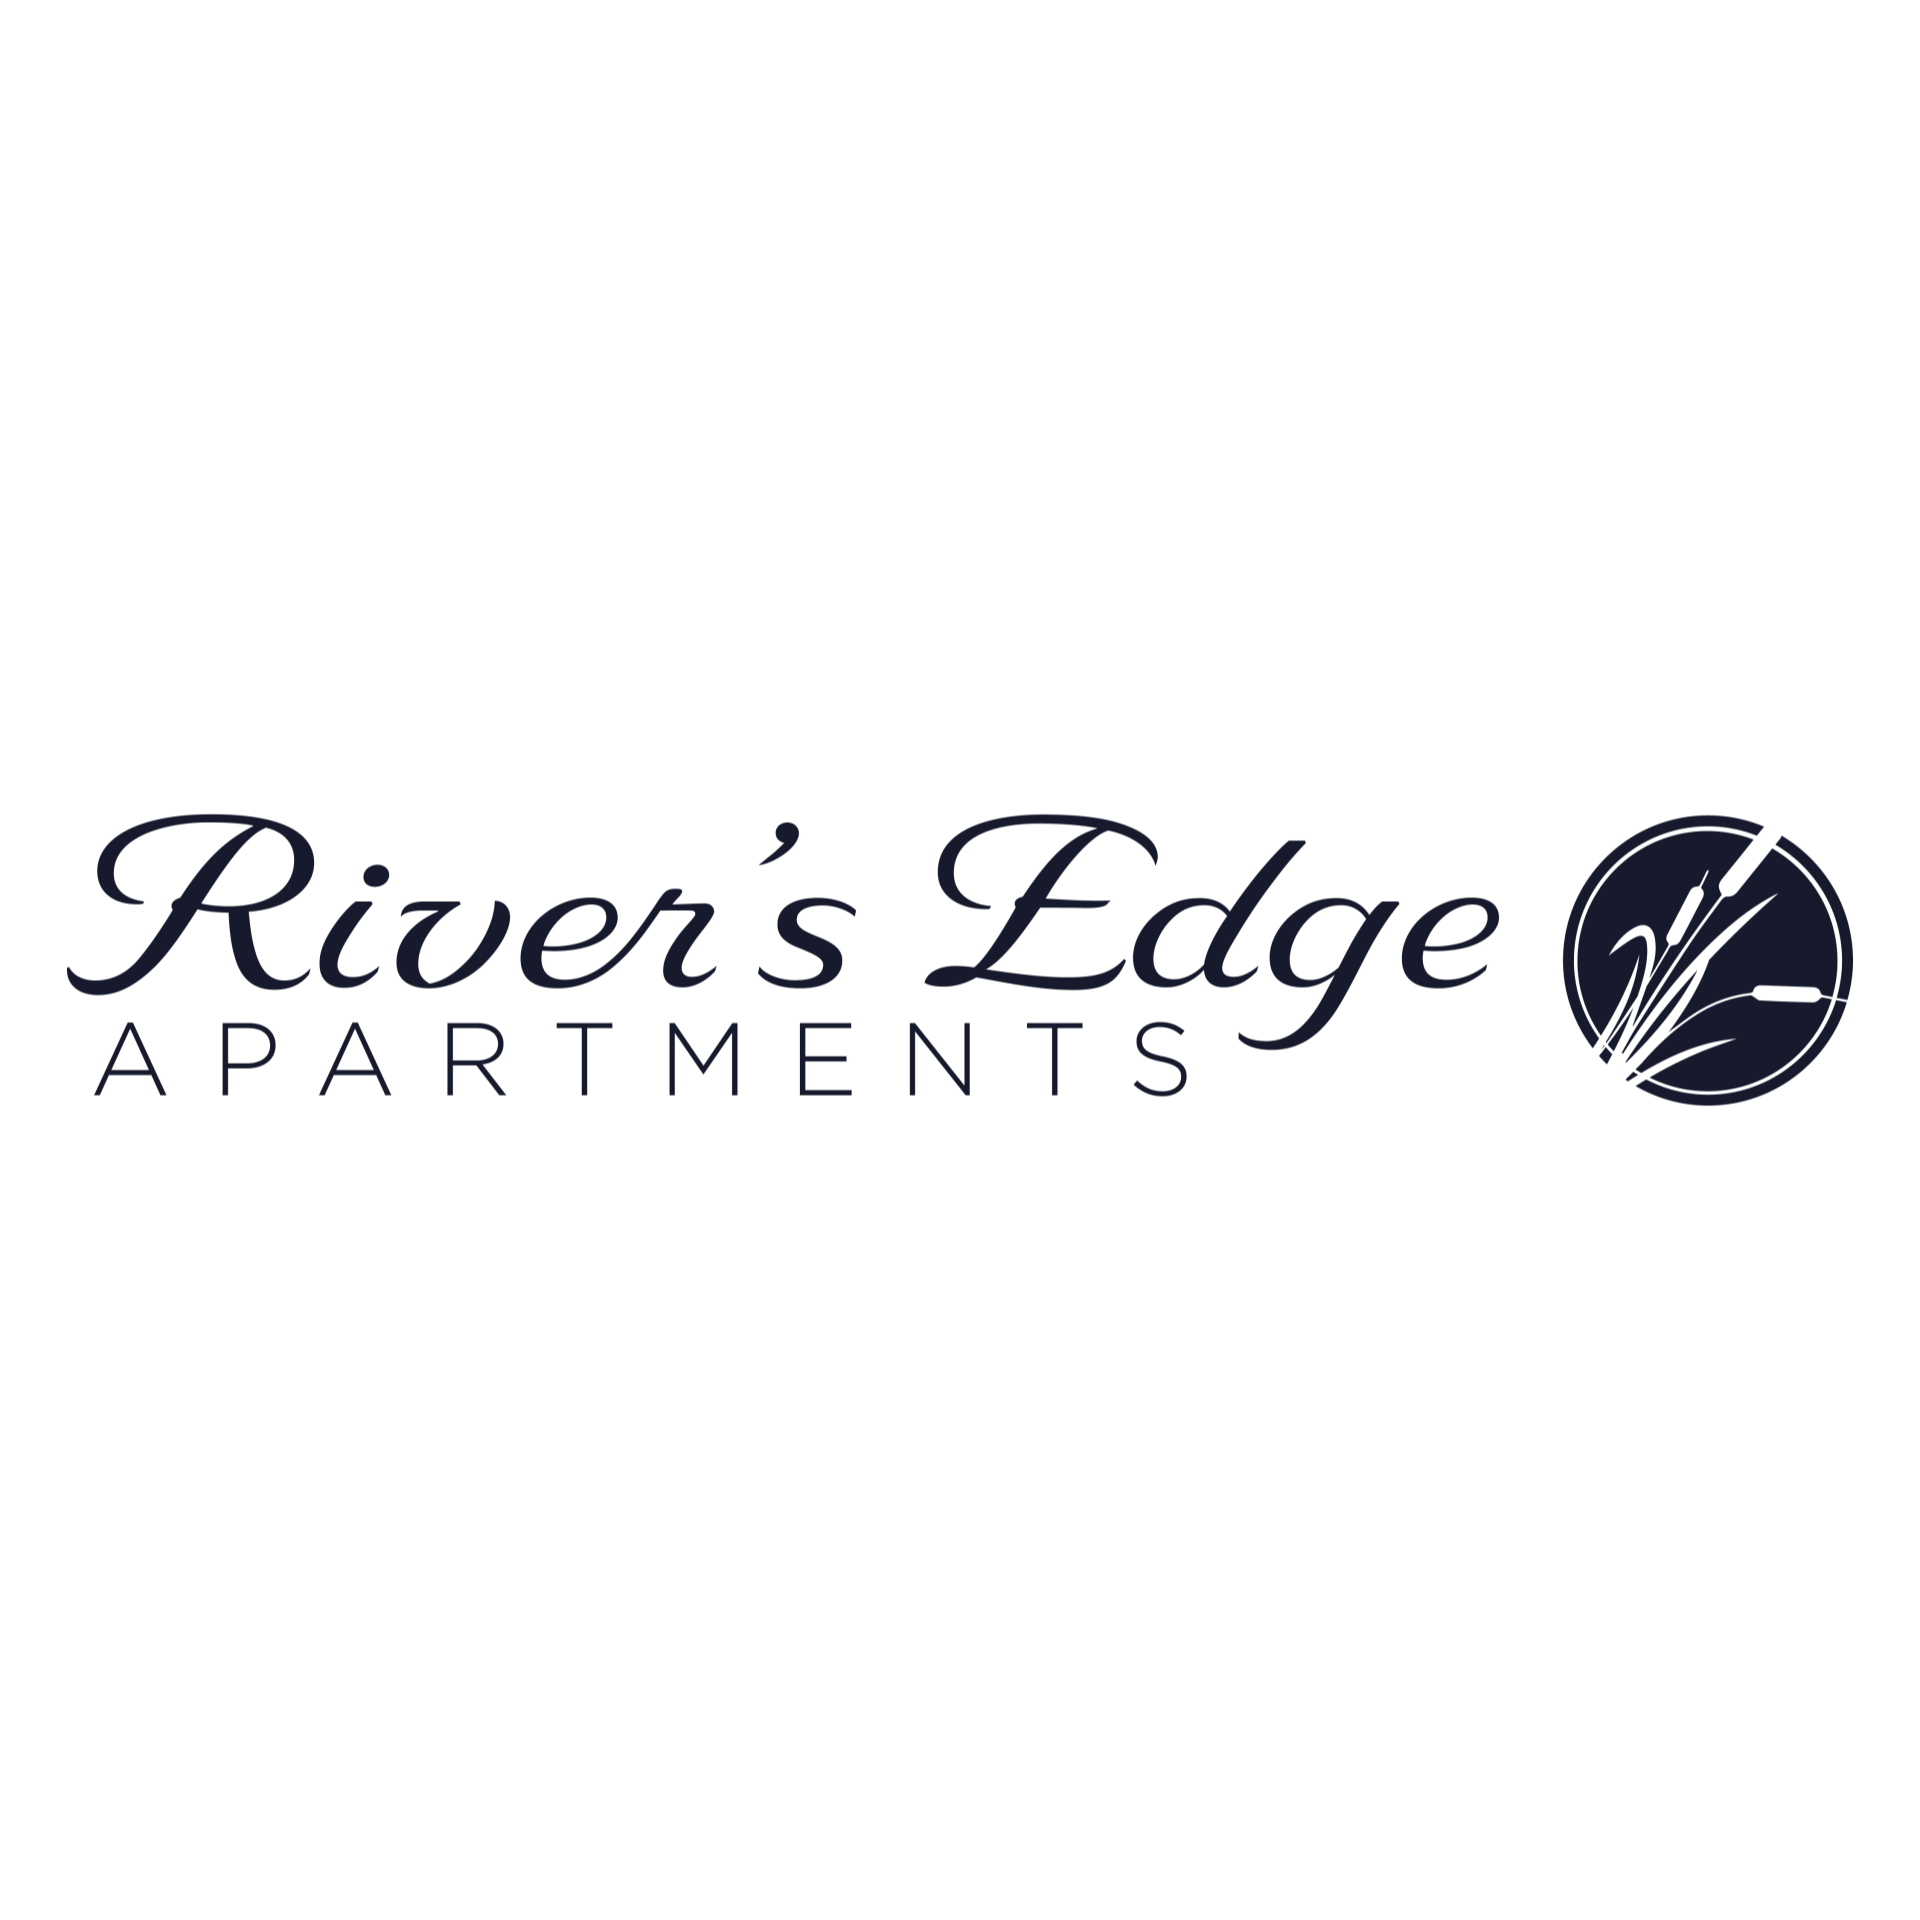 Rivers Edge Apartments